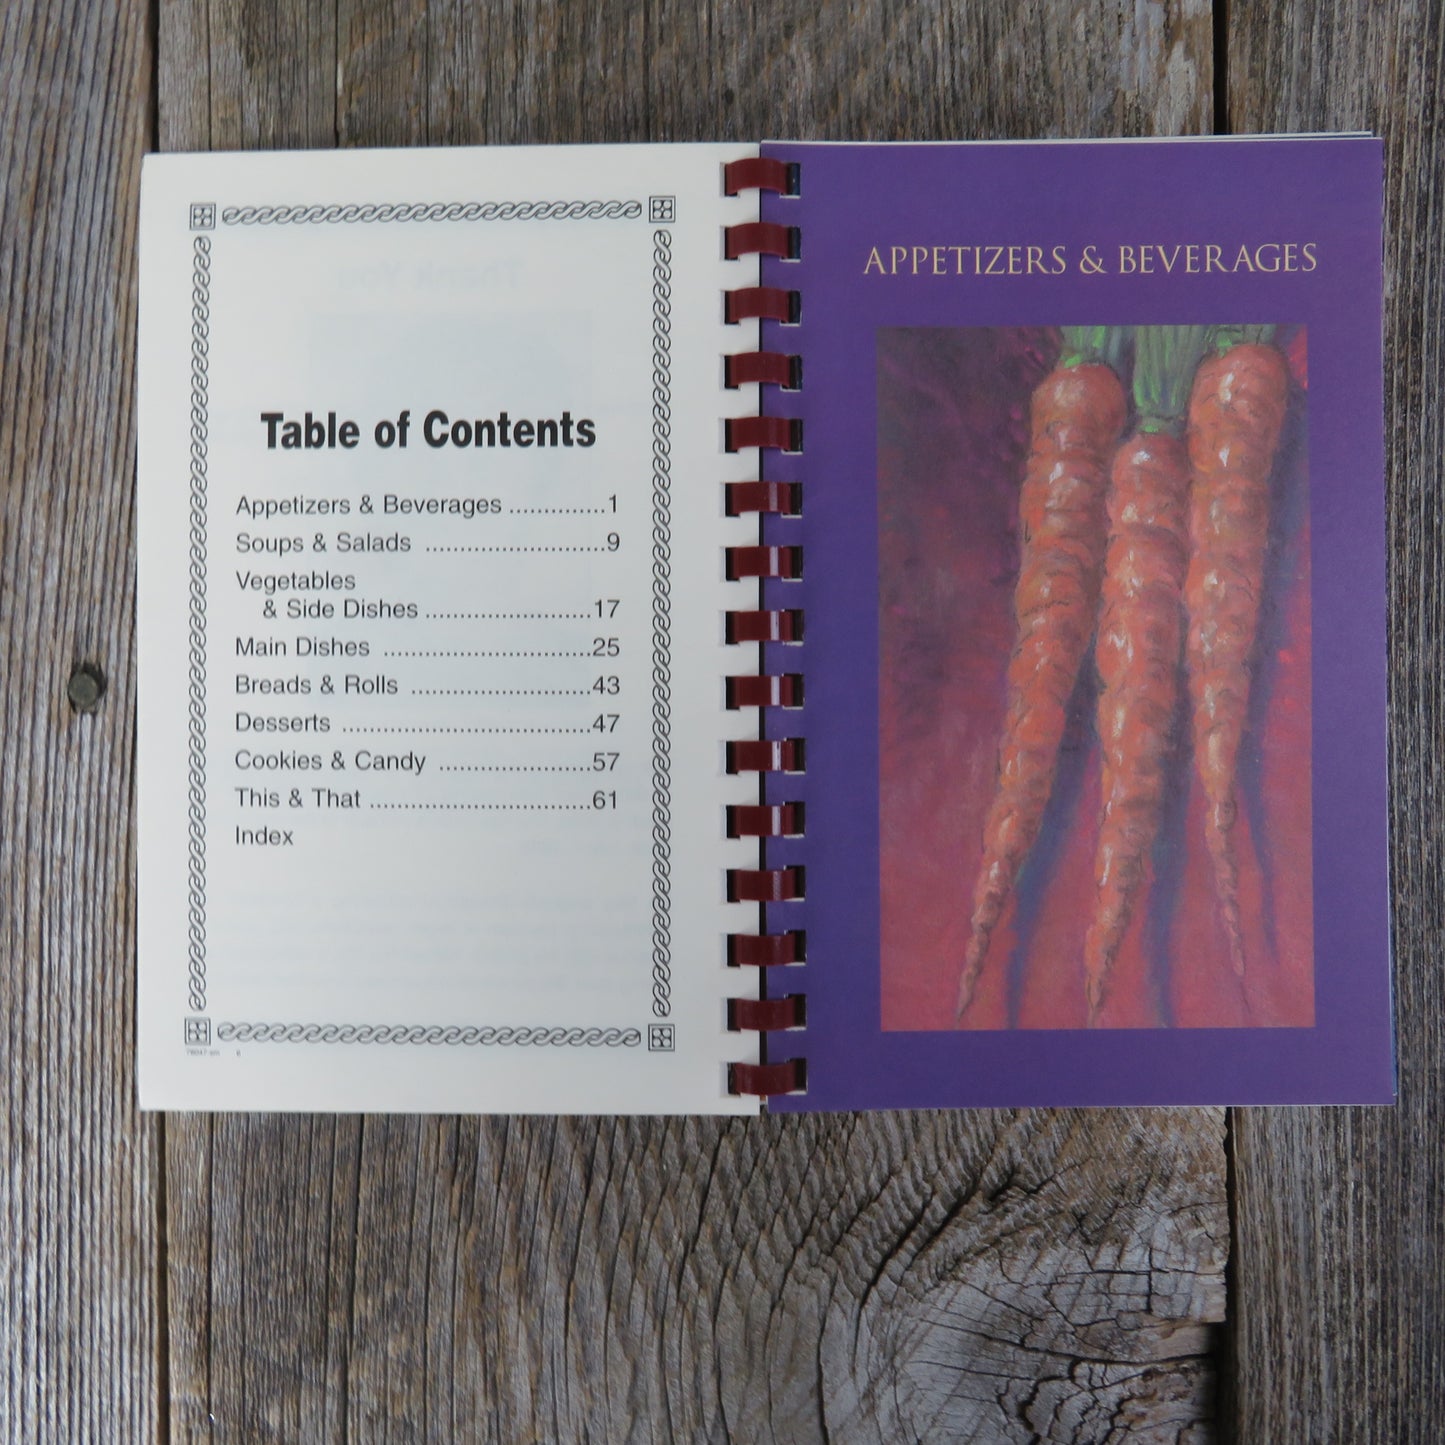 California Community Cookbook Placerville Soroptimist International Best Recipes 2007 - At Grandma's Table